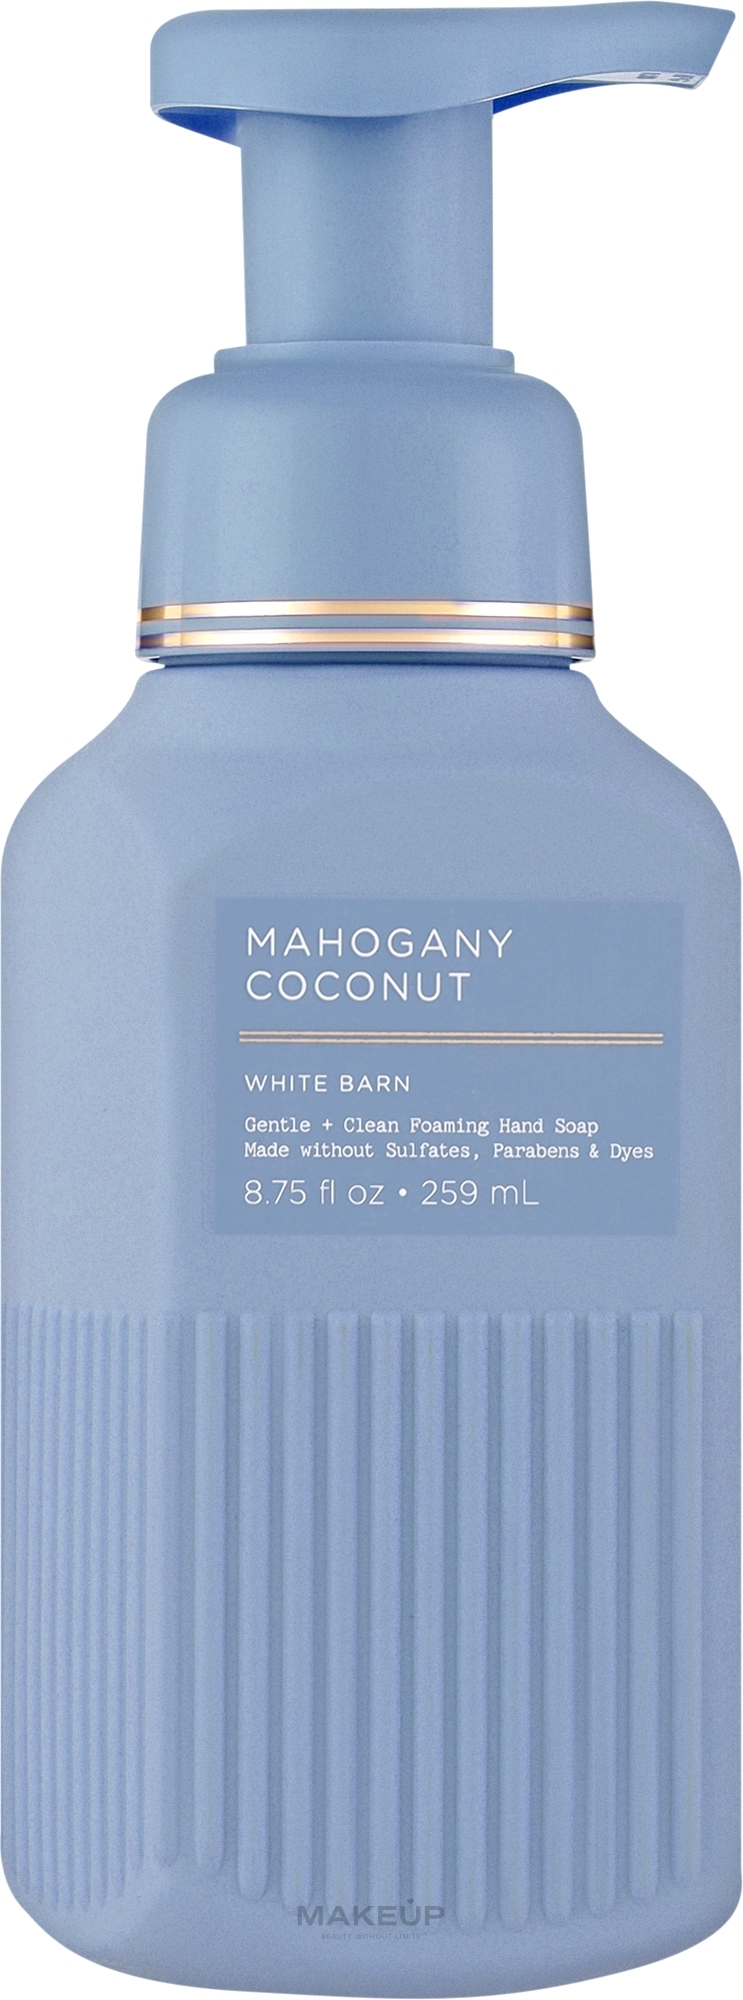 Мыло-пена для рук - Bath And Body Works Gentle & Clean Foaming Hand Soap Mahogany Coconut — фото 259ml